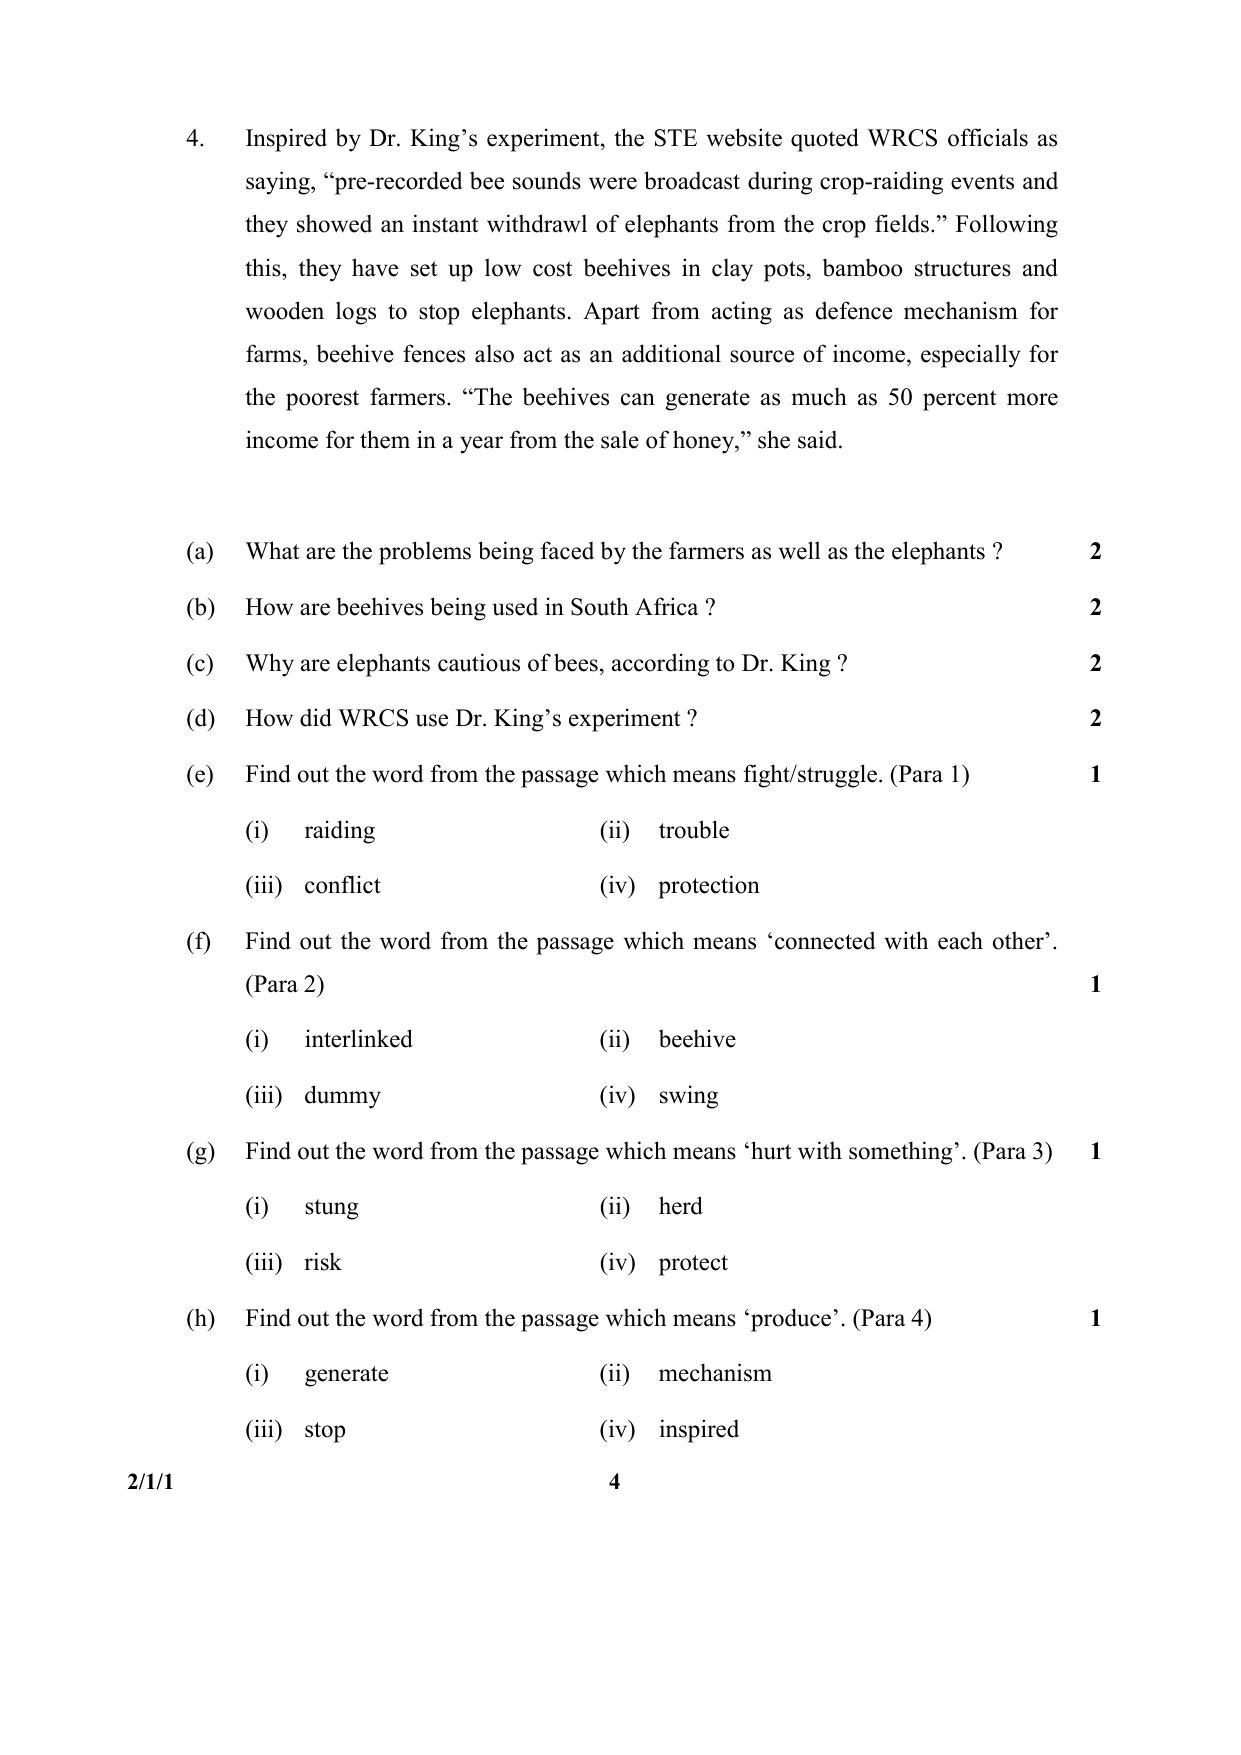 CBSE Class 10 2-1-1 (English Lan. & Lit.) 2017-comptt Question Paper - Page 4